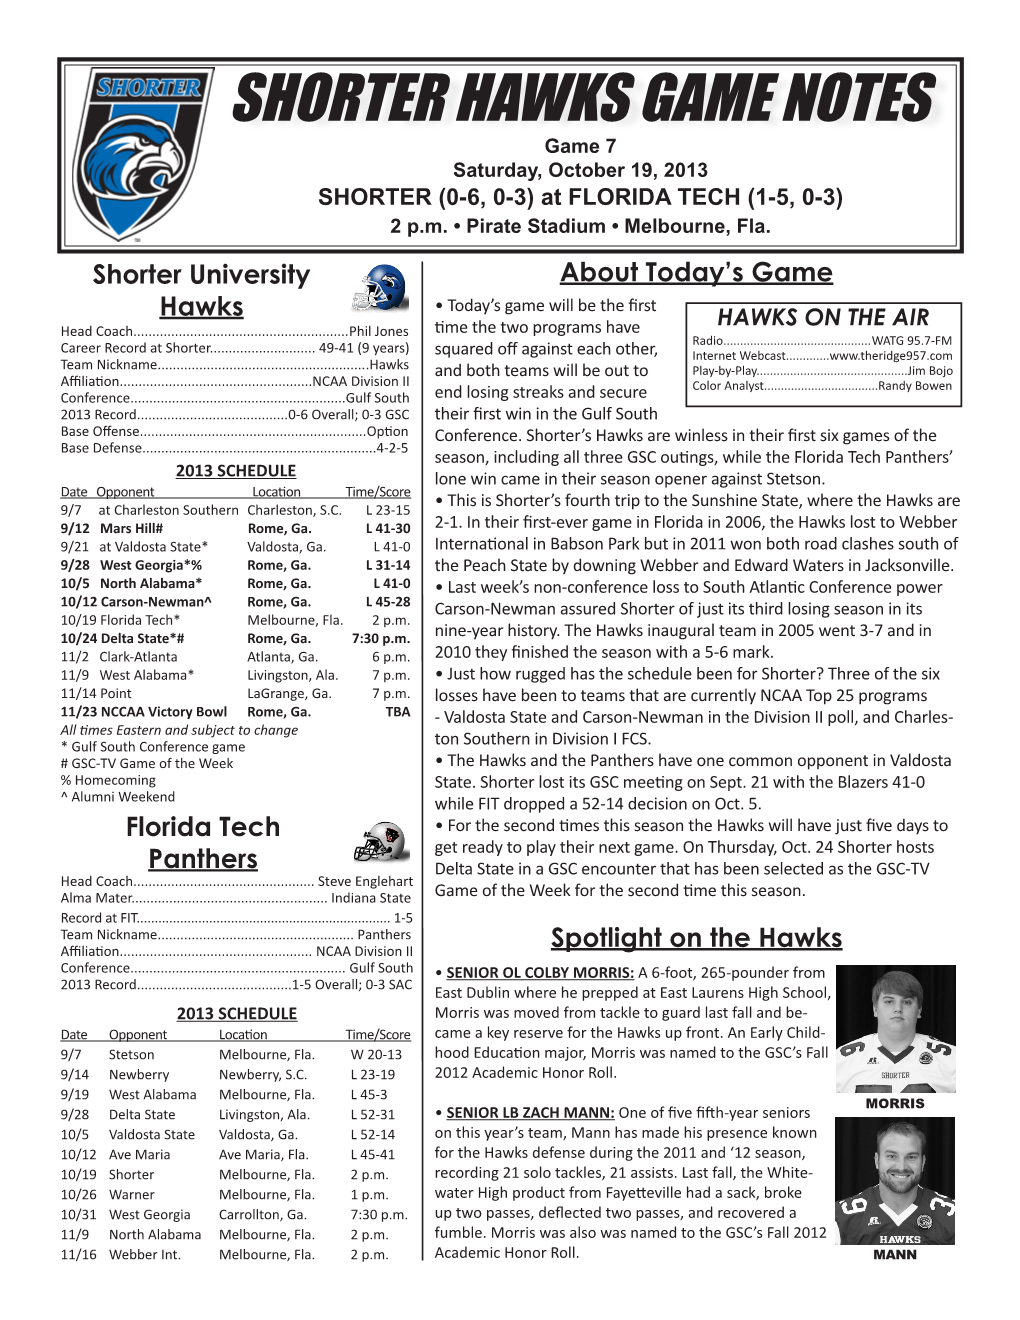 SHORTER HAWKS GAME NOTES Game 7 Saturday, October 19, 2013 SHORTER (0-6, 0-3) at FLORIDA TECH (1-5, 0-3) 2 P.M